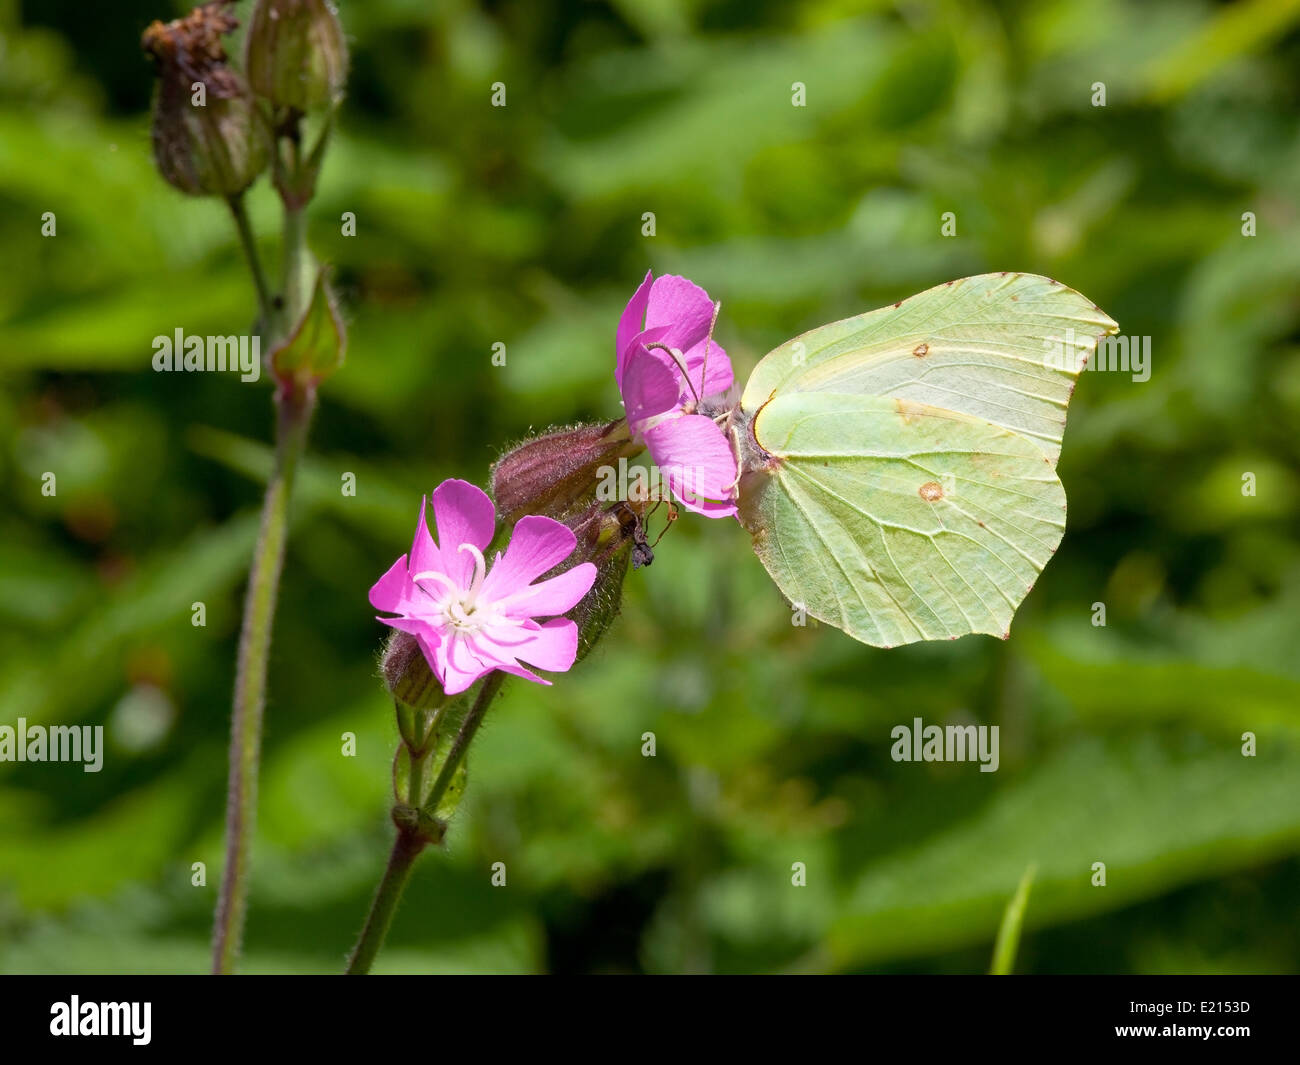 A female brimstone butterfly, Latin name Gonepteryx rhamni feeding on a pink Campion flower. Stock Photo